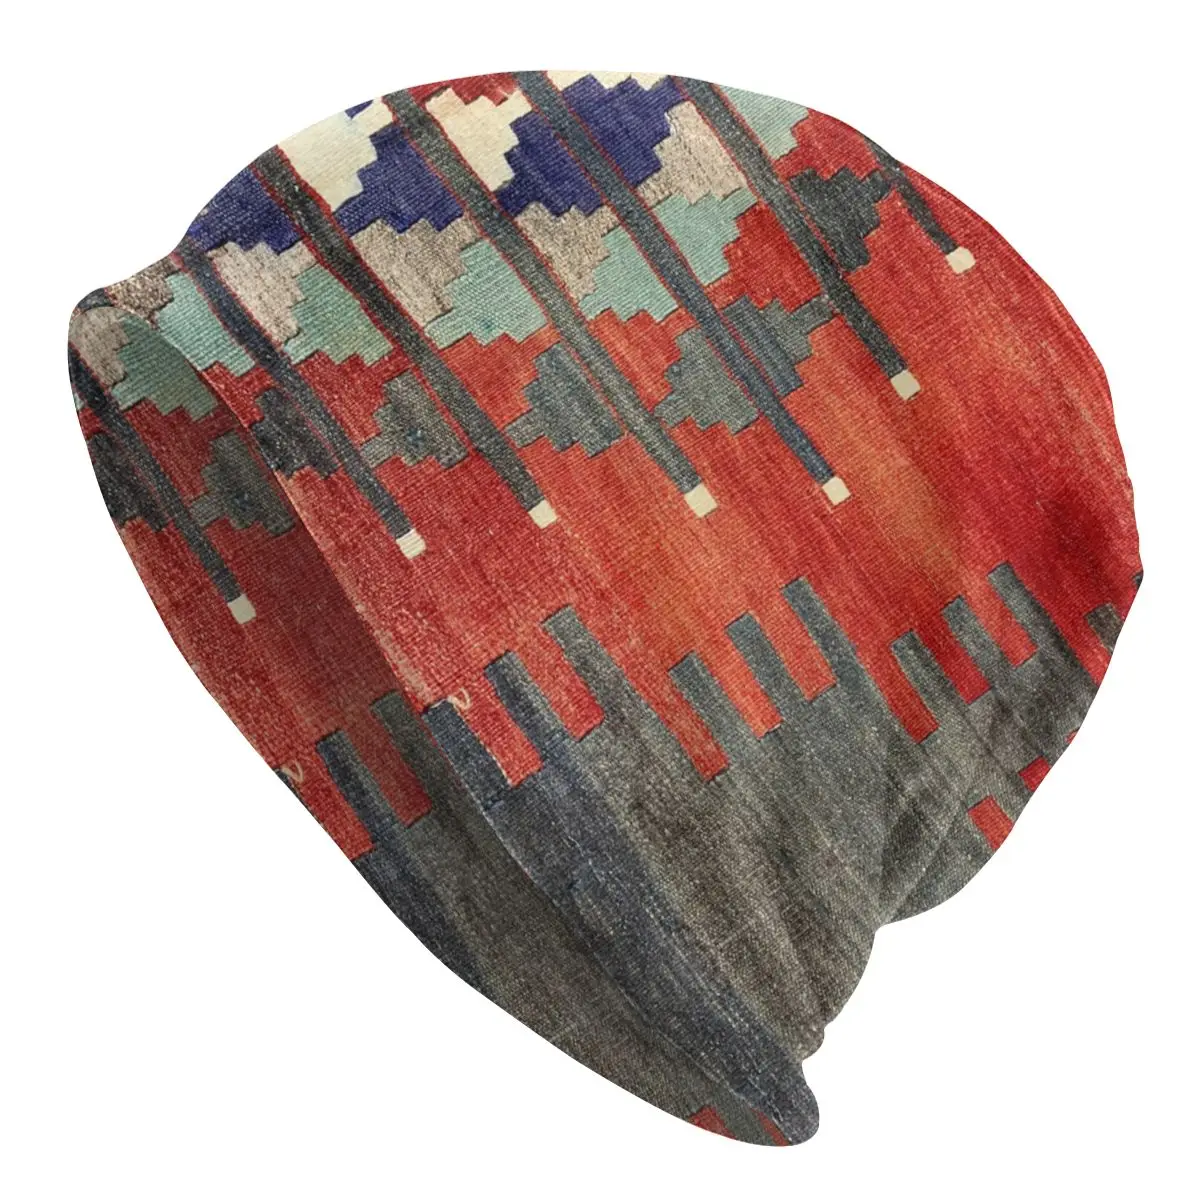 

Vintage Turkish Kilim Navaho Weave Aztec Textile Beanies Caps Unisex Knitted Hat Adult Boho Ethnic Persian Tribal Bonnet Hats